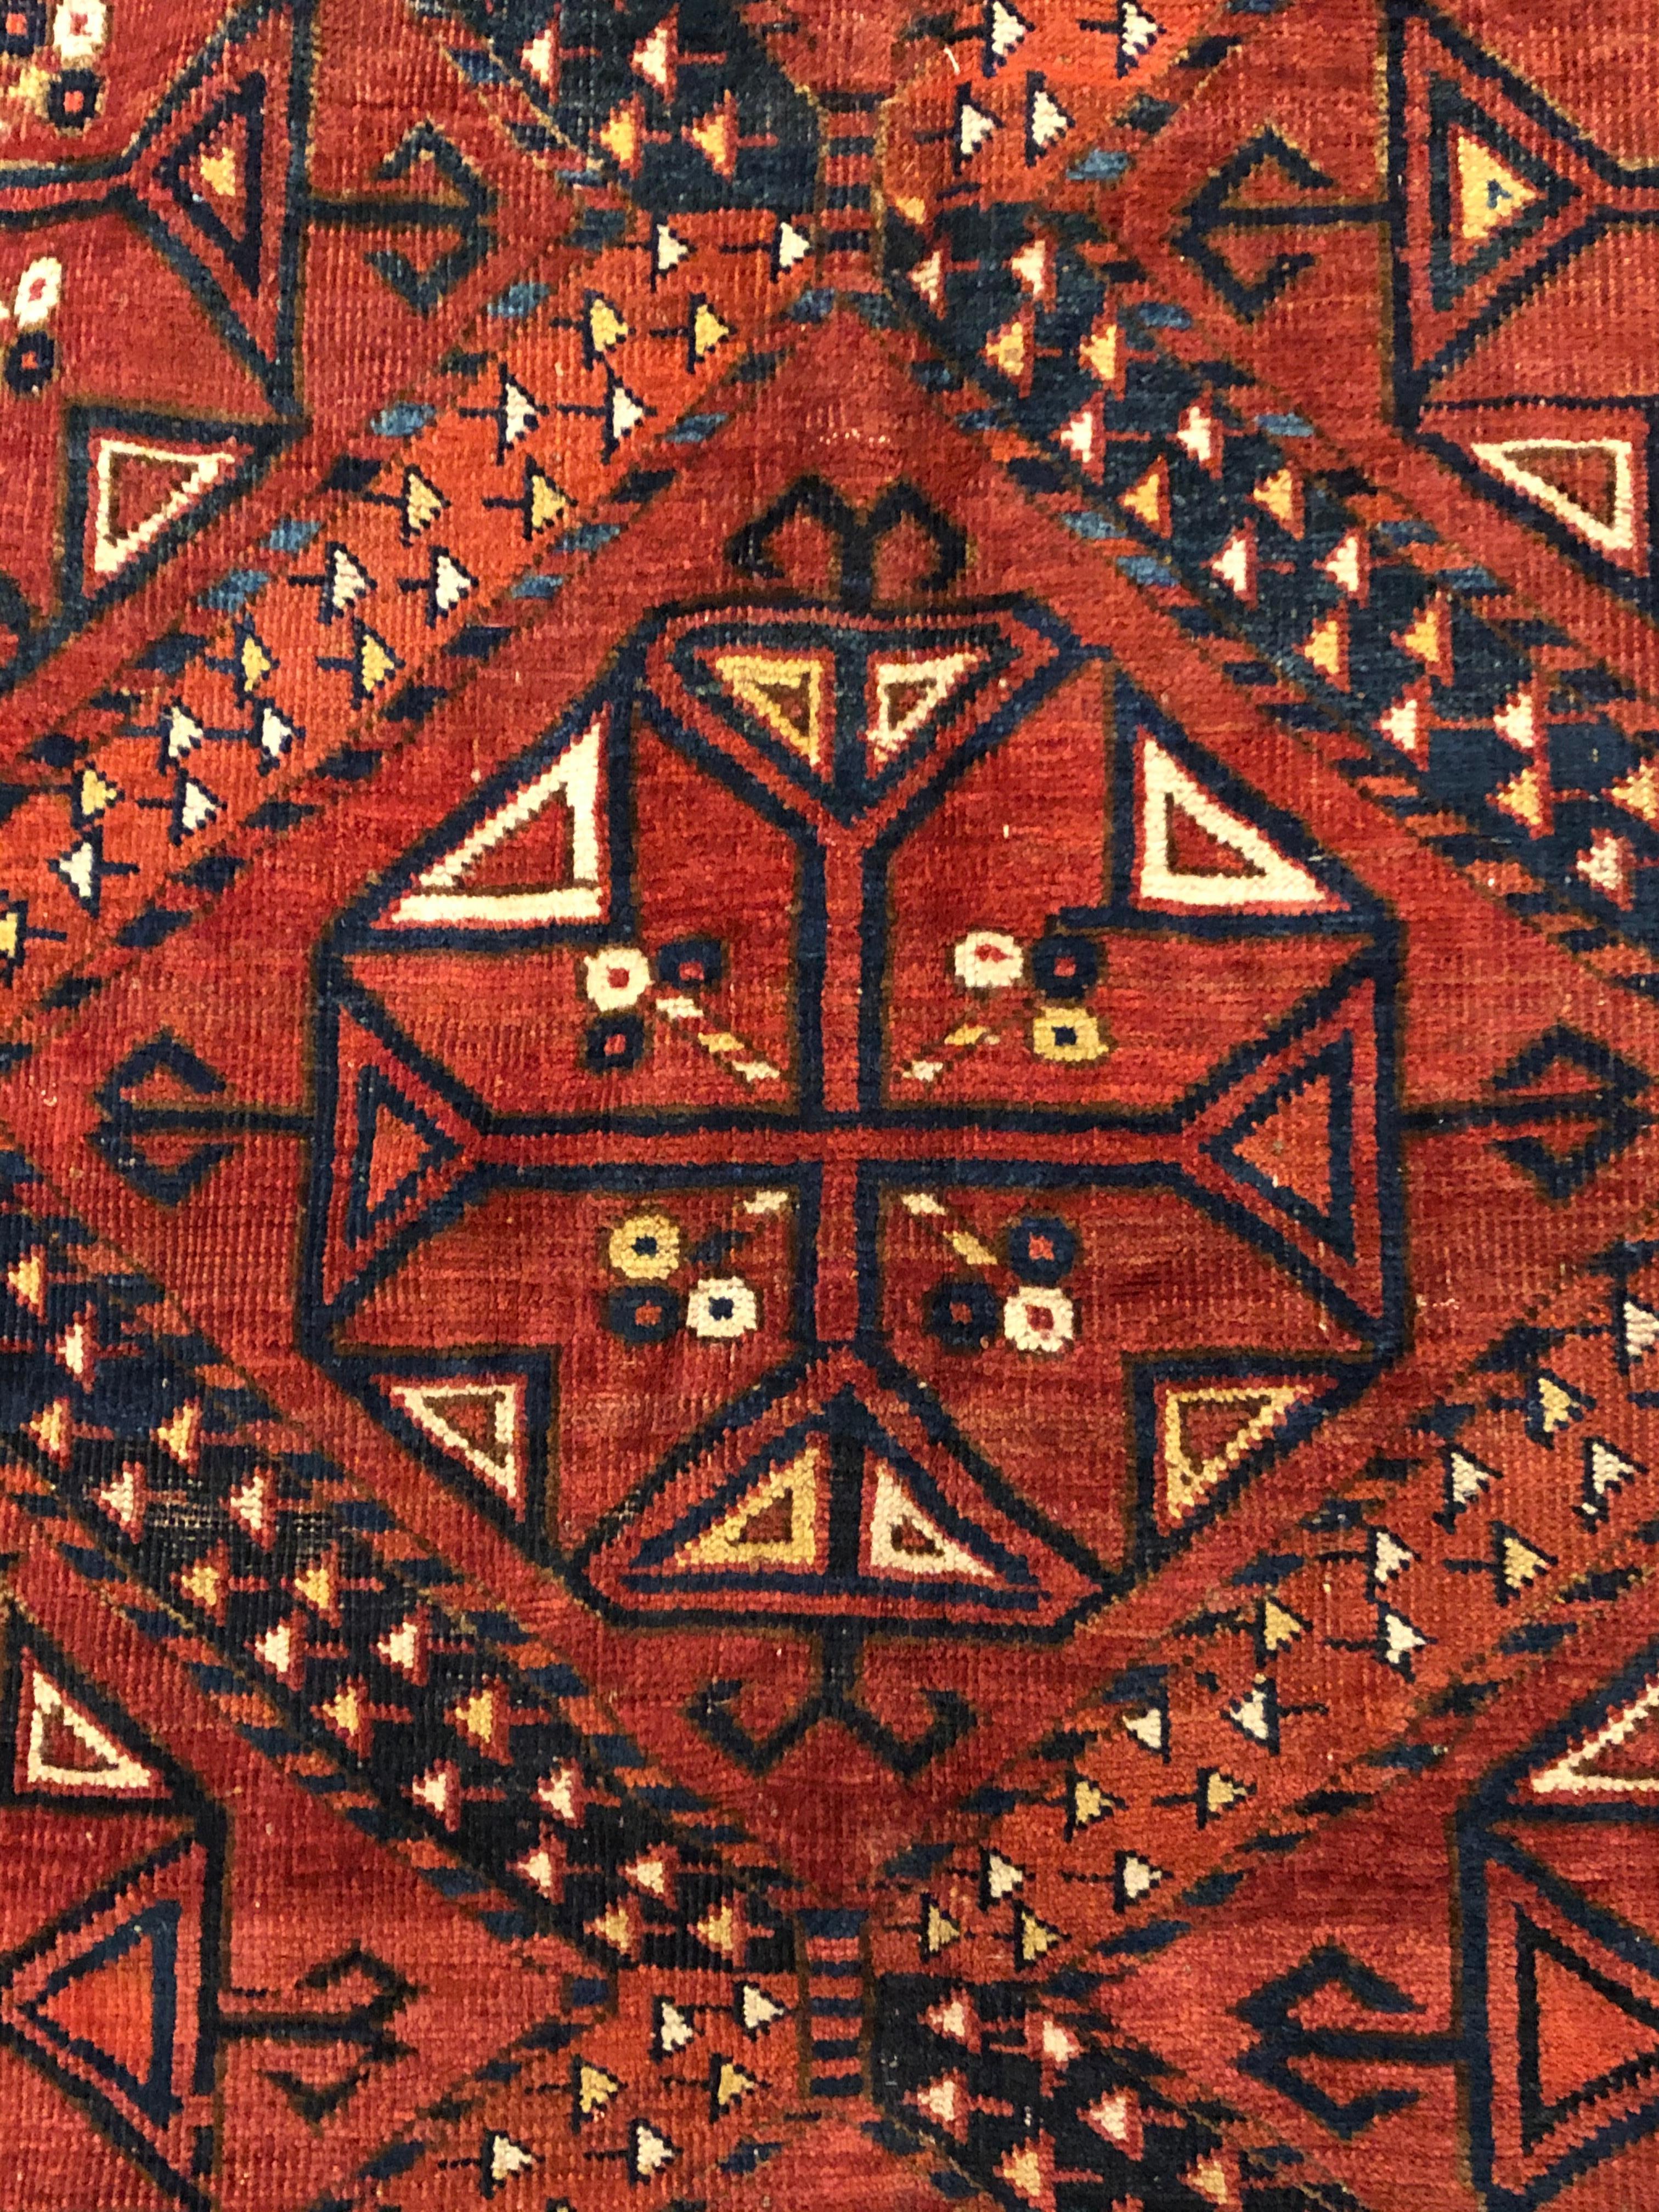 19th Century Antique Red Geometric Turkmen Erzari Rug € 9, 000, ca 1870 For Sale 9